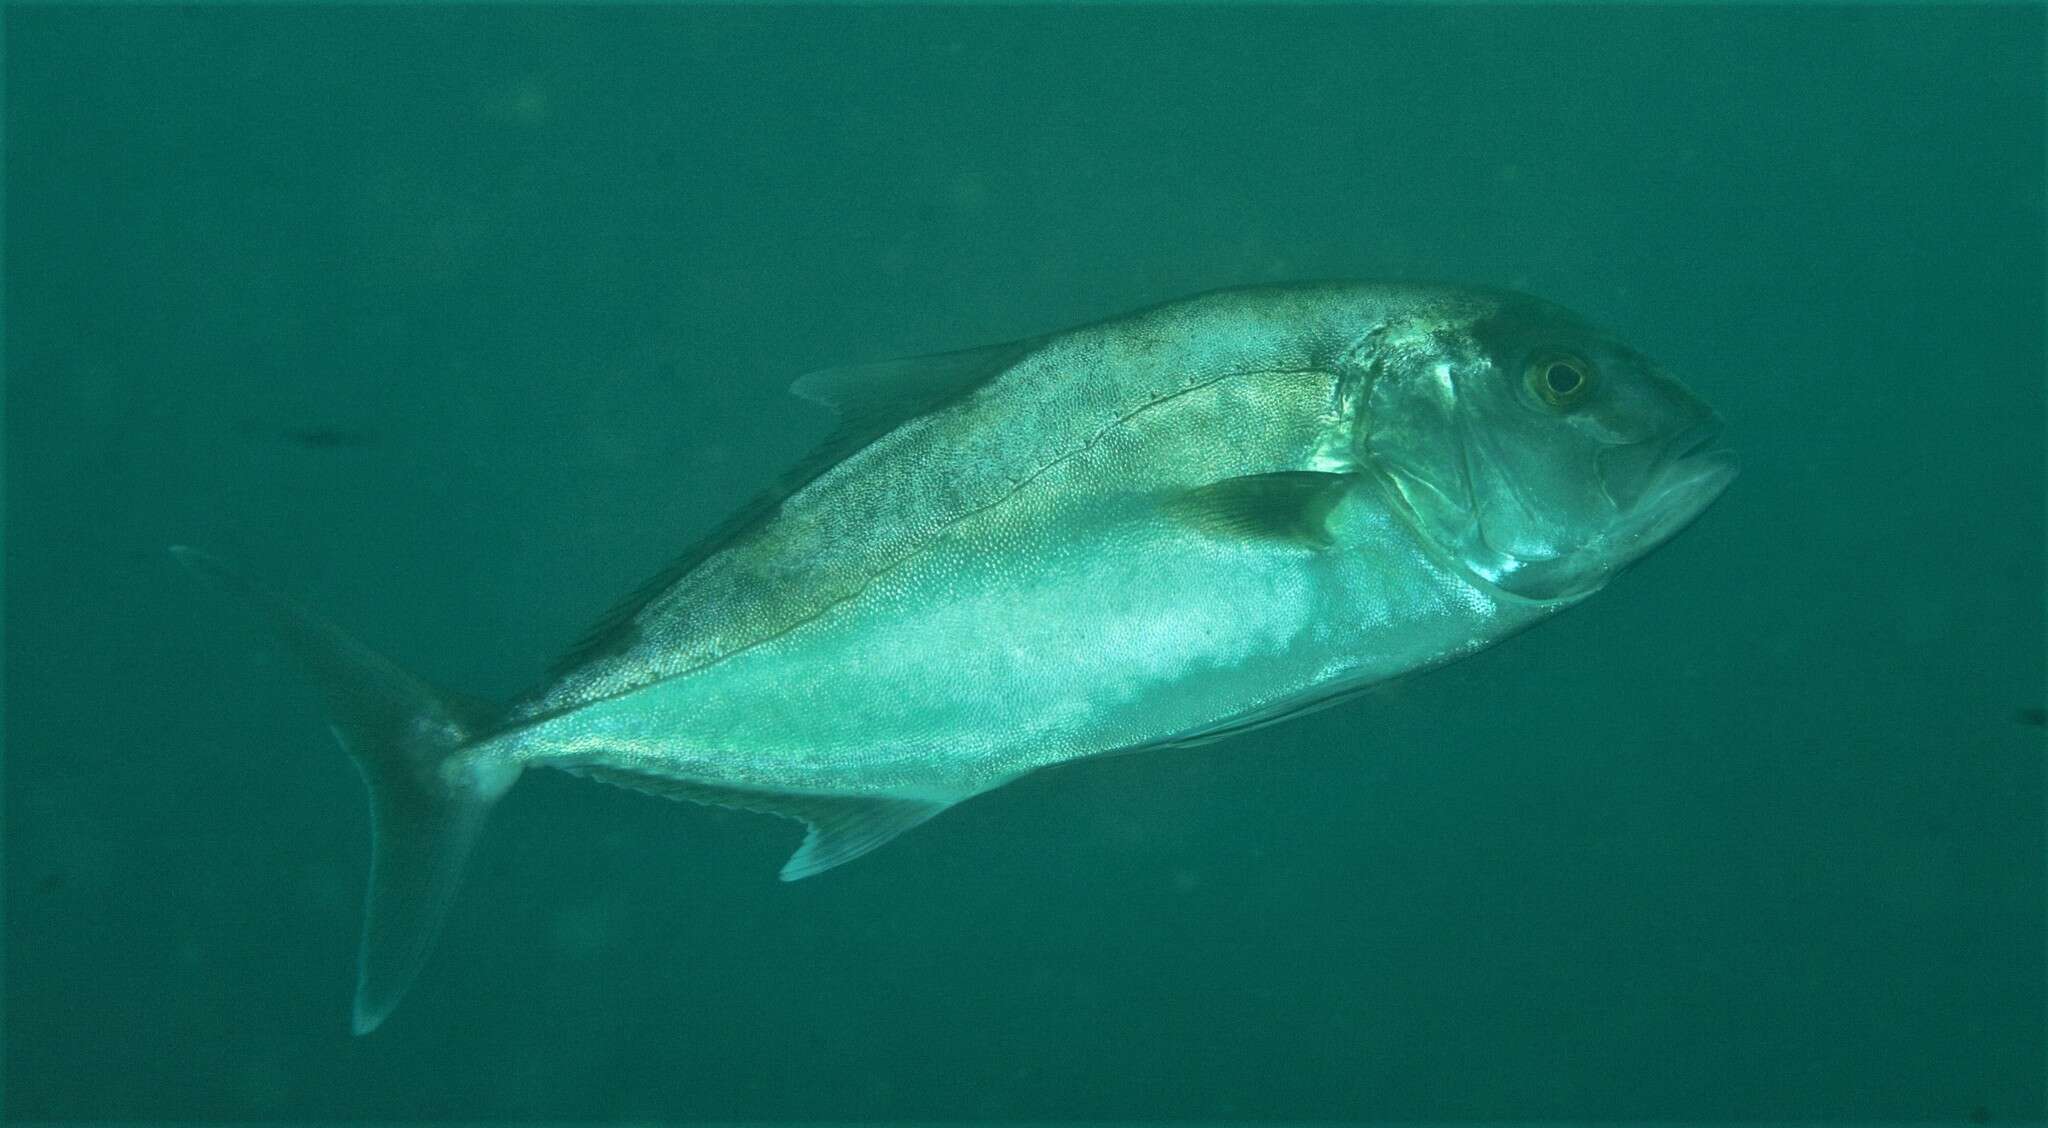 Image of Samson fish